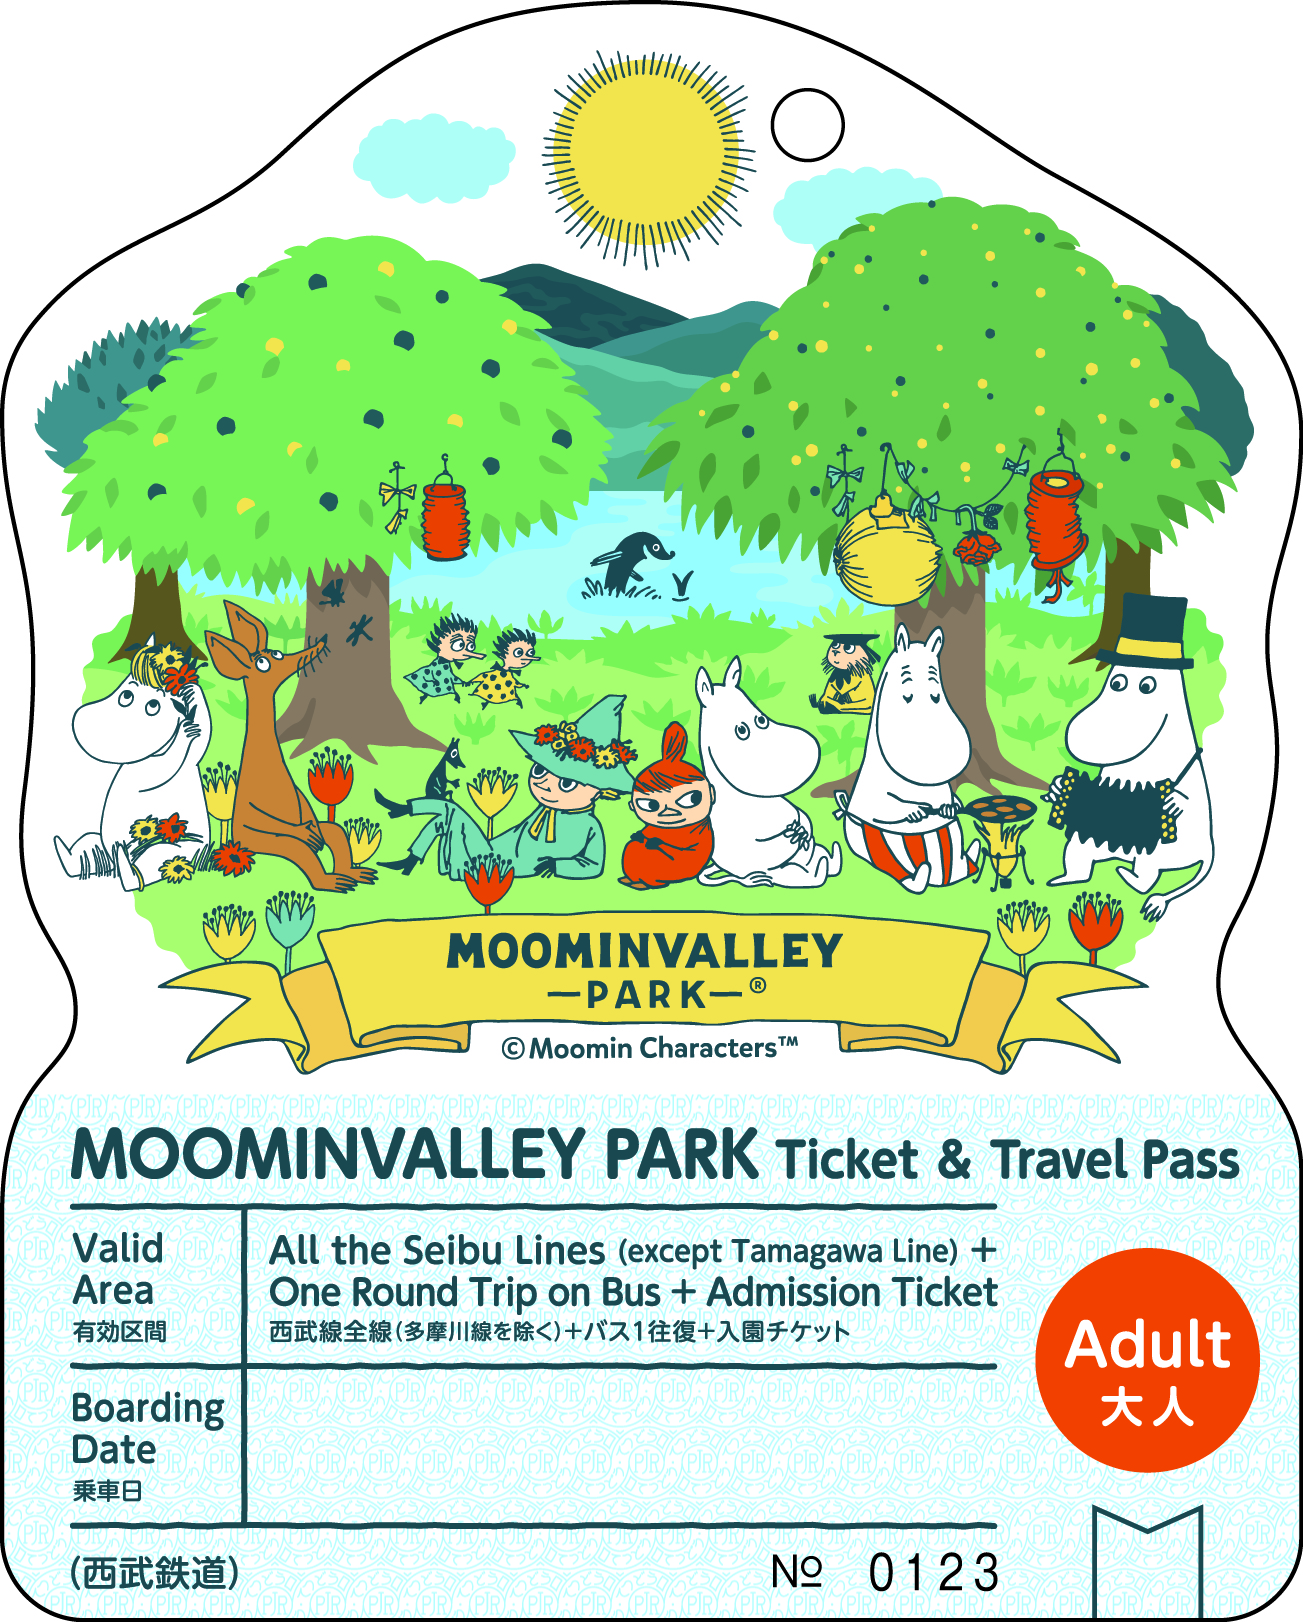 MOOMINVALLEY PARK Ticket & Travel Pass